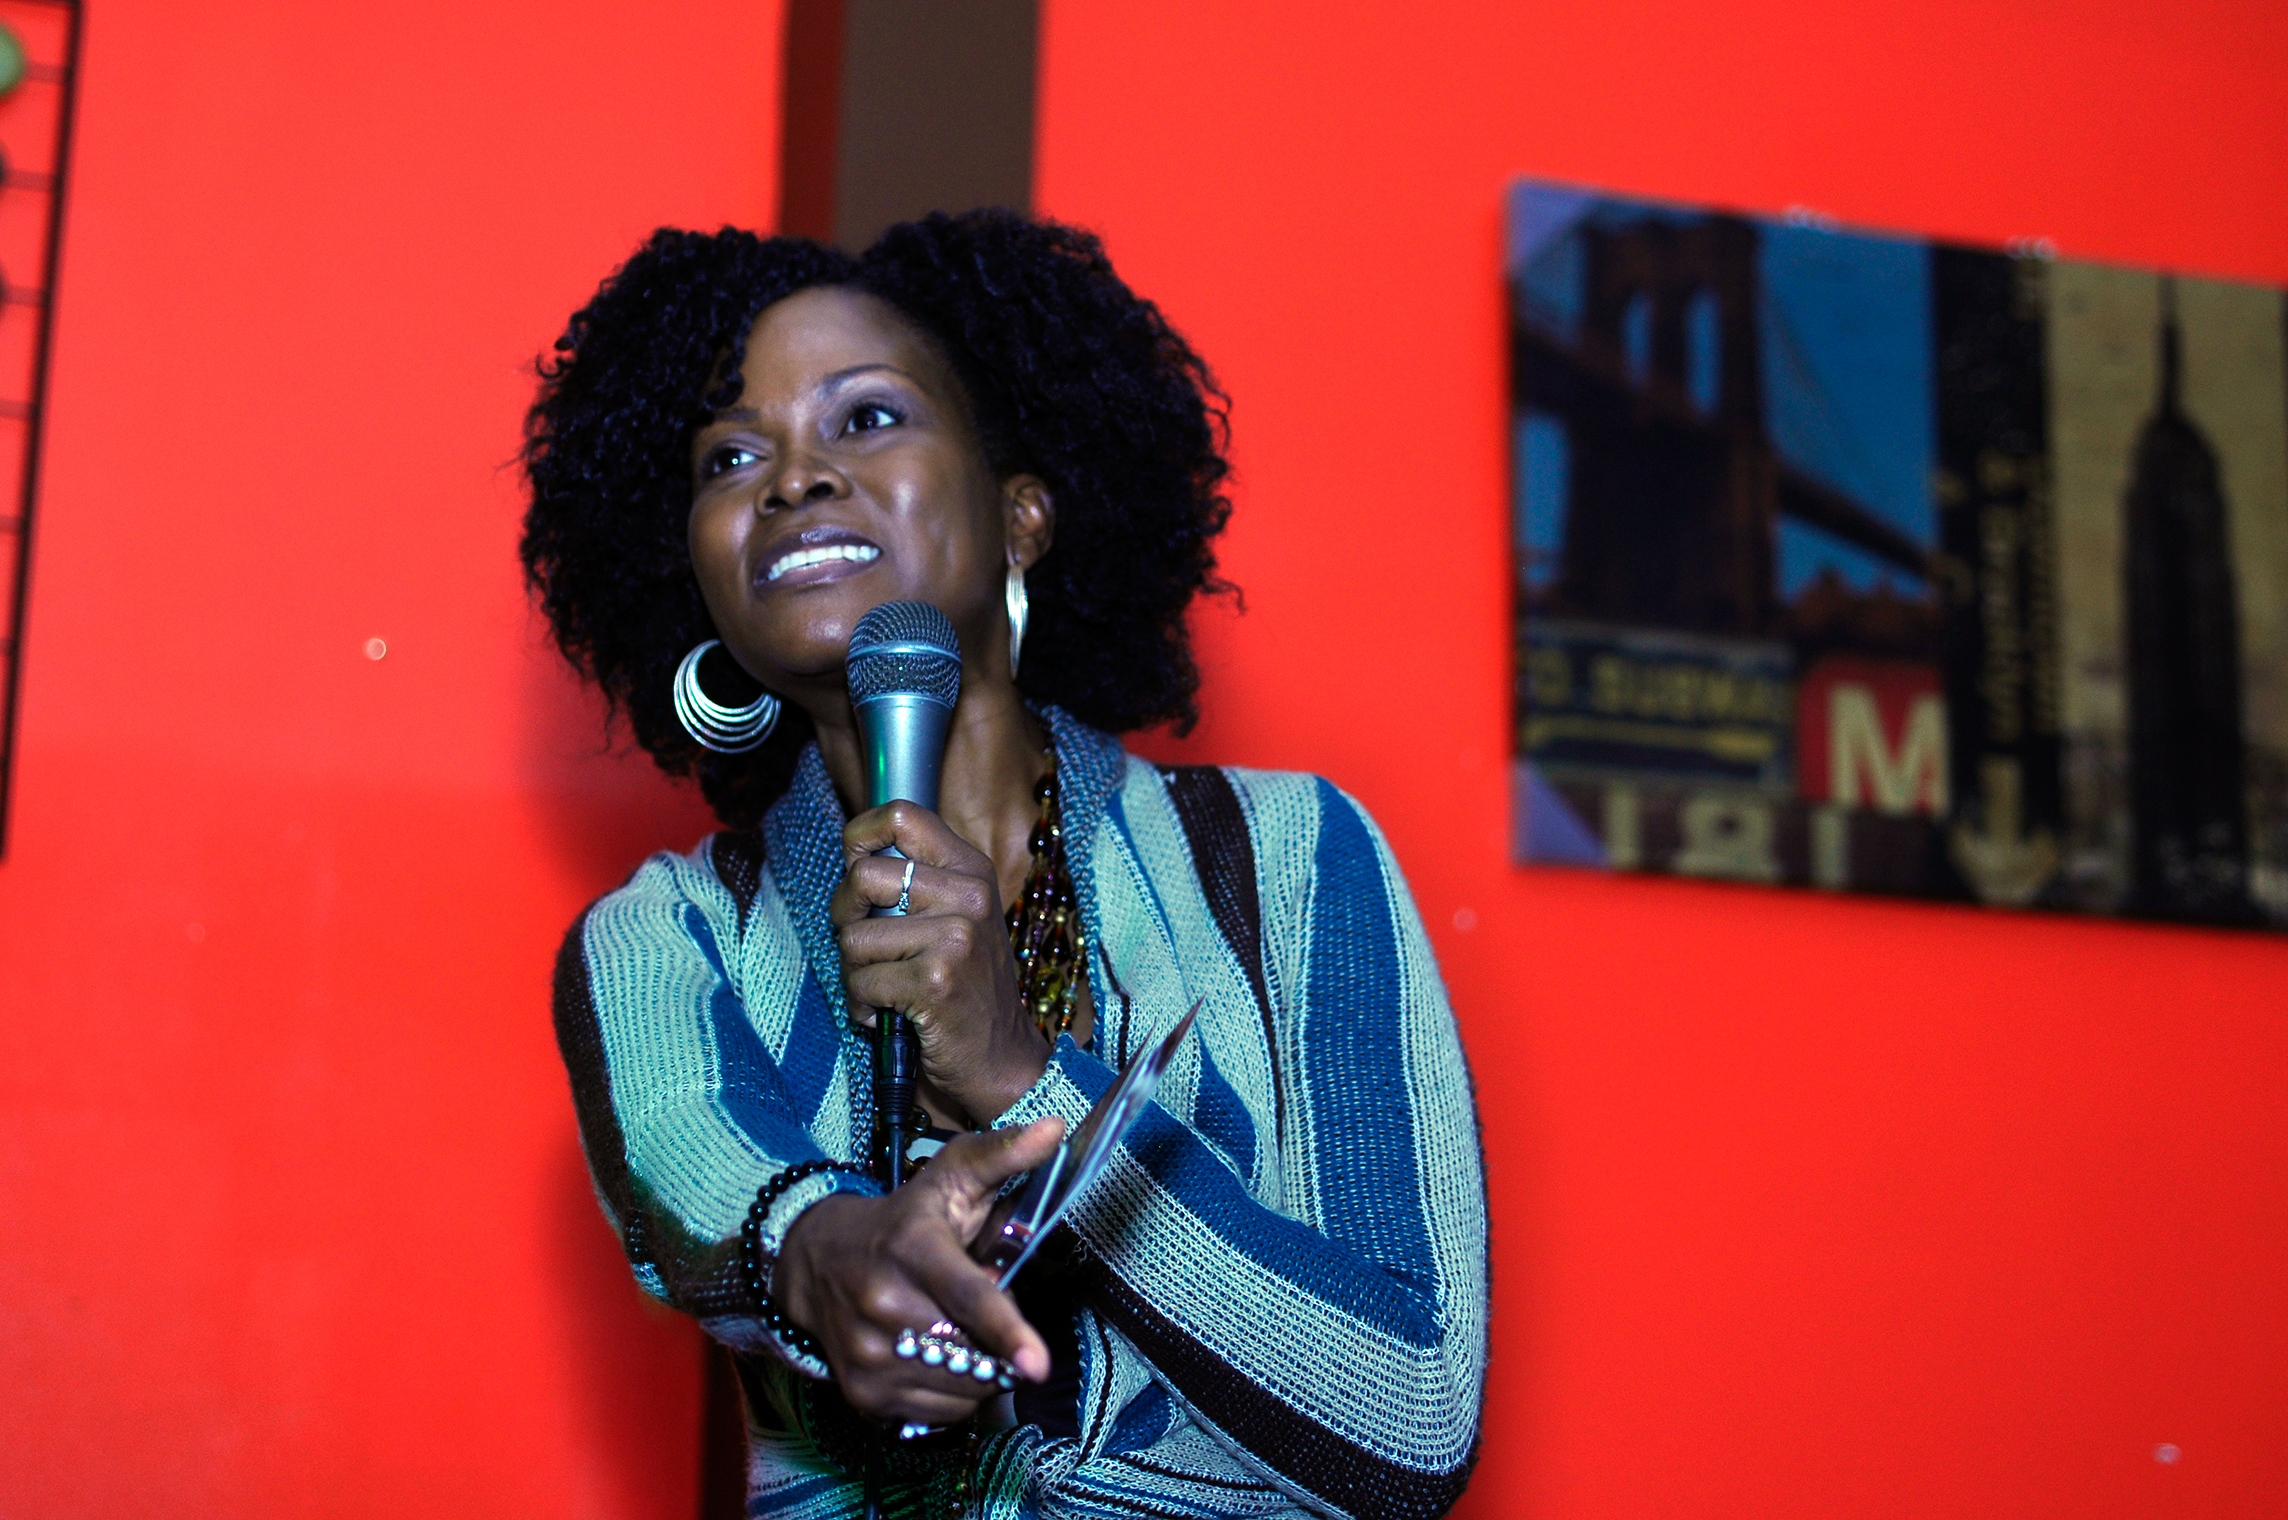 Abiola Abrams speaking at black women's event.